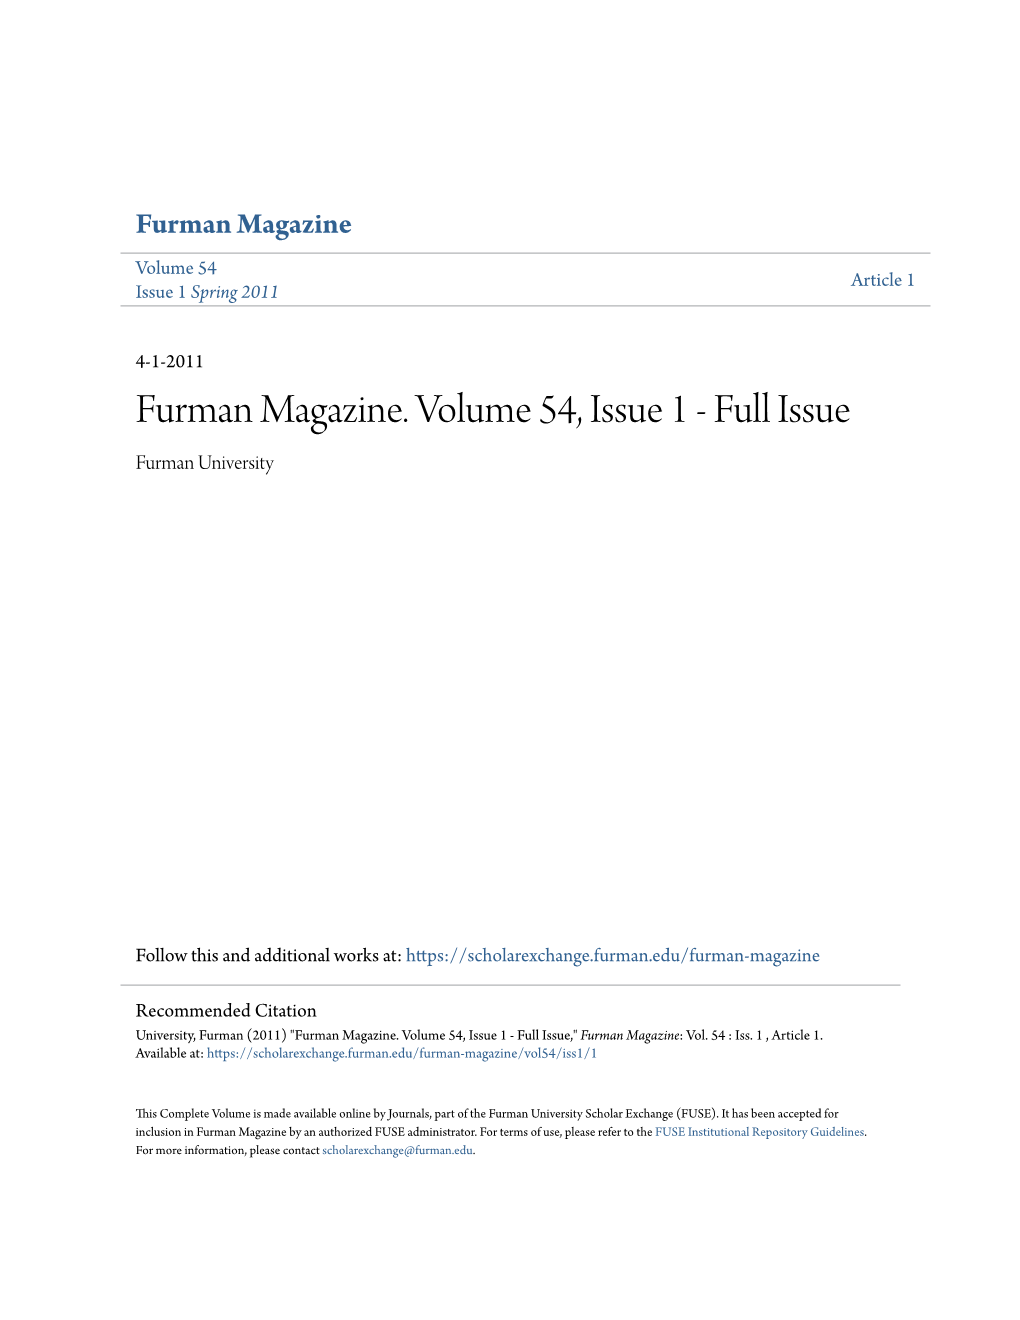 Furman Magazine. Volume 54, Issue 1 - Full Issue Furman University